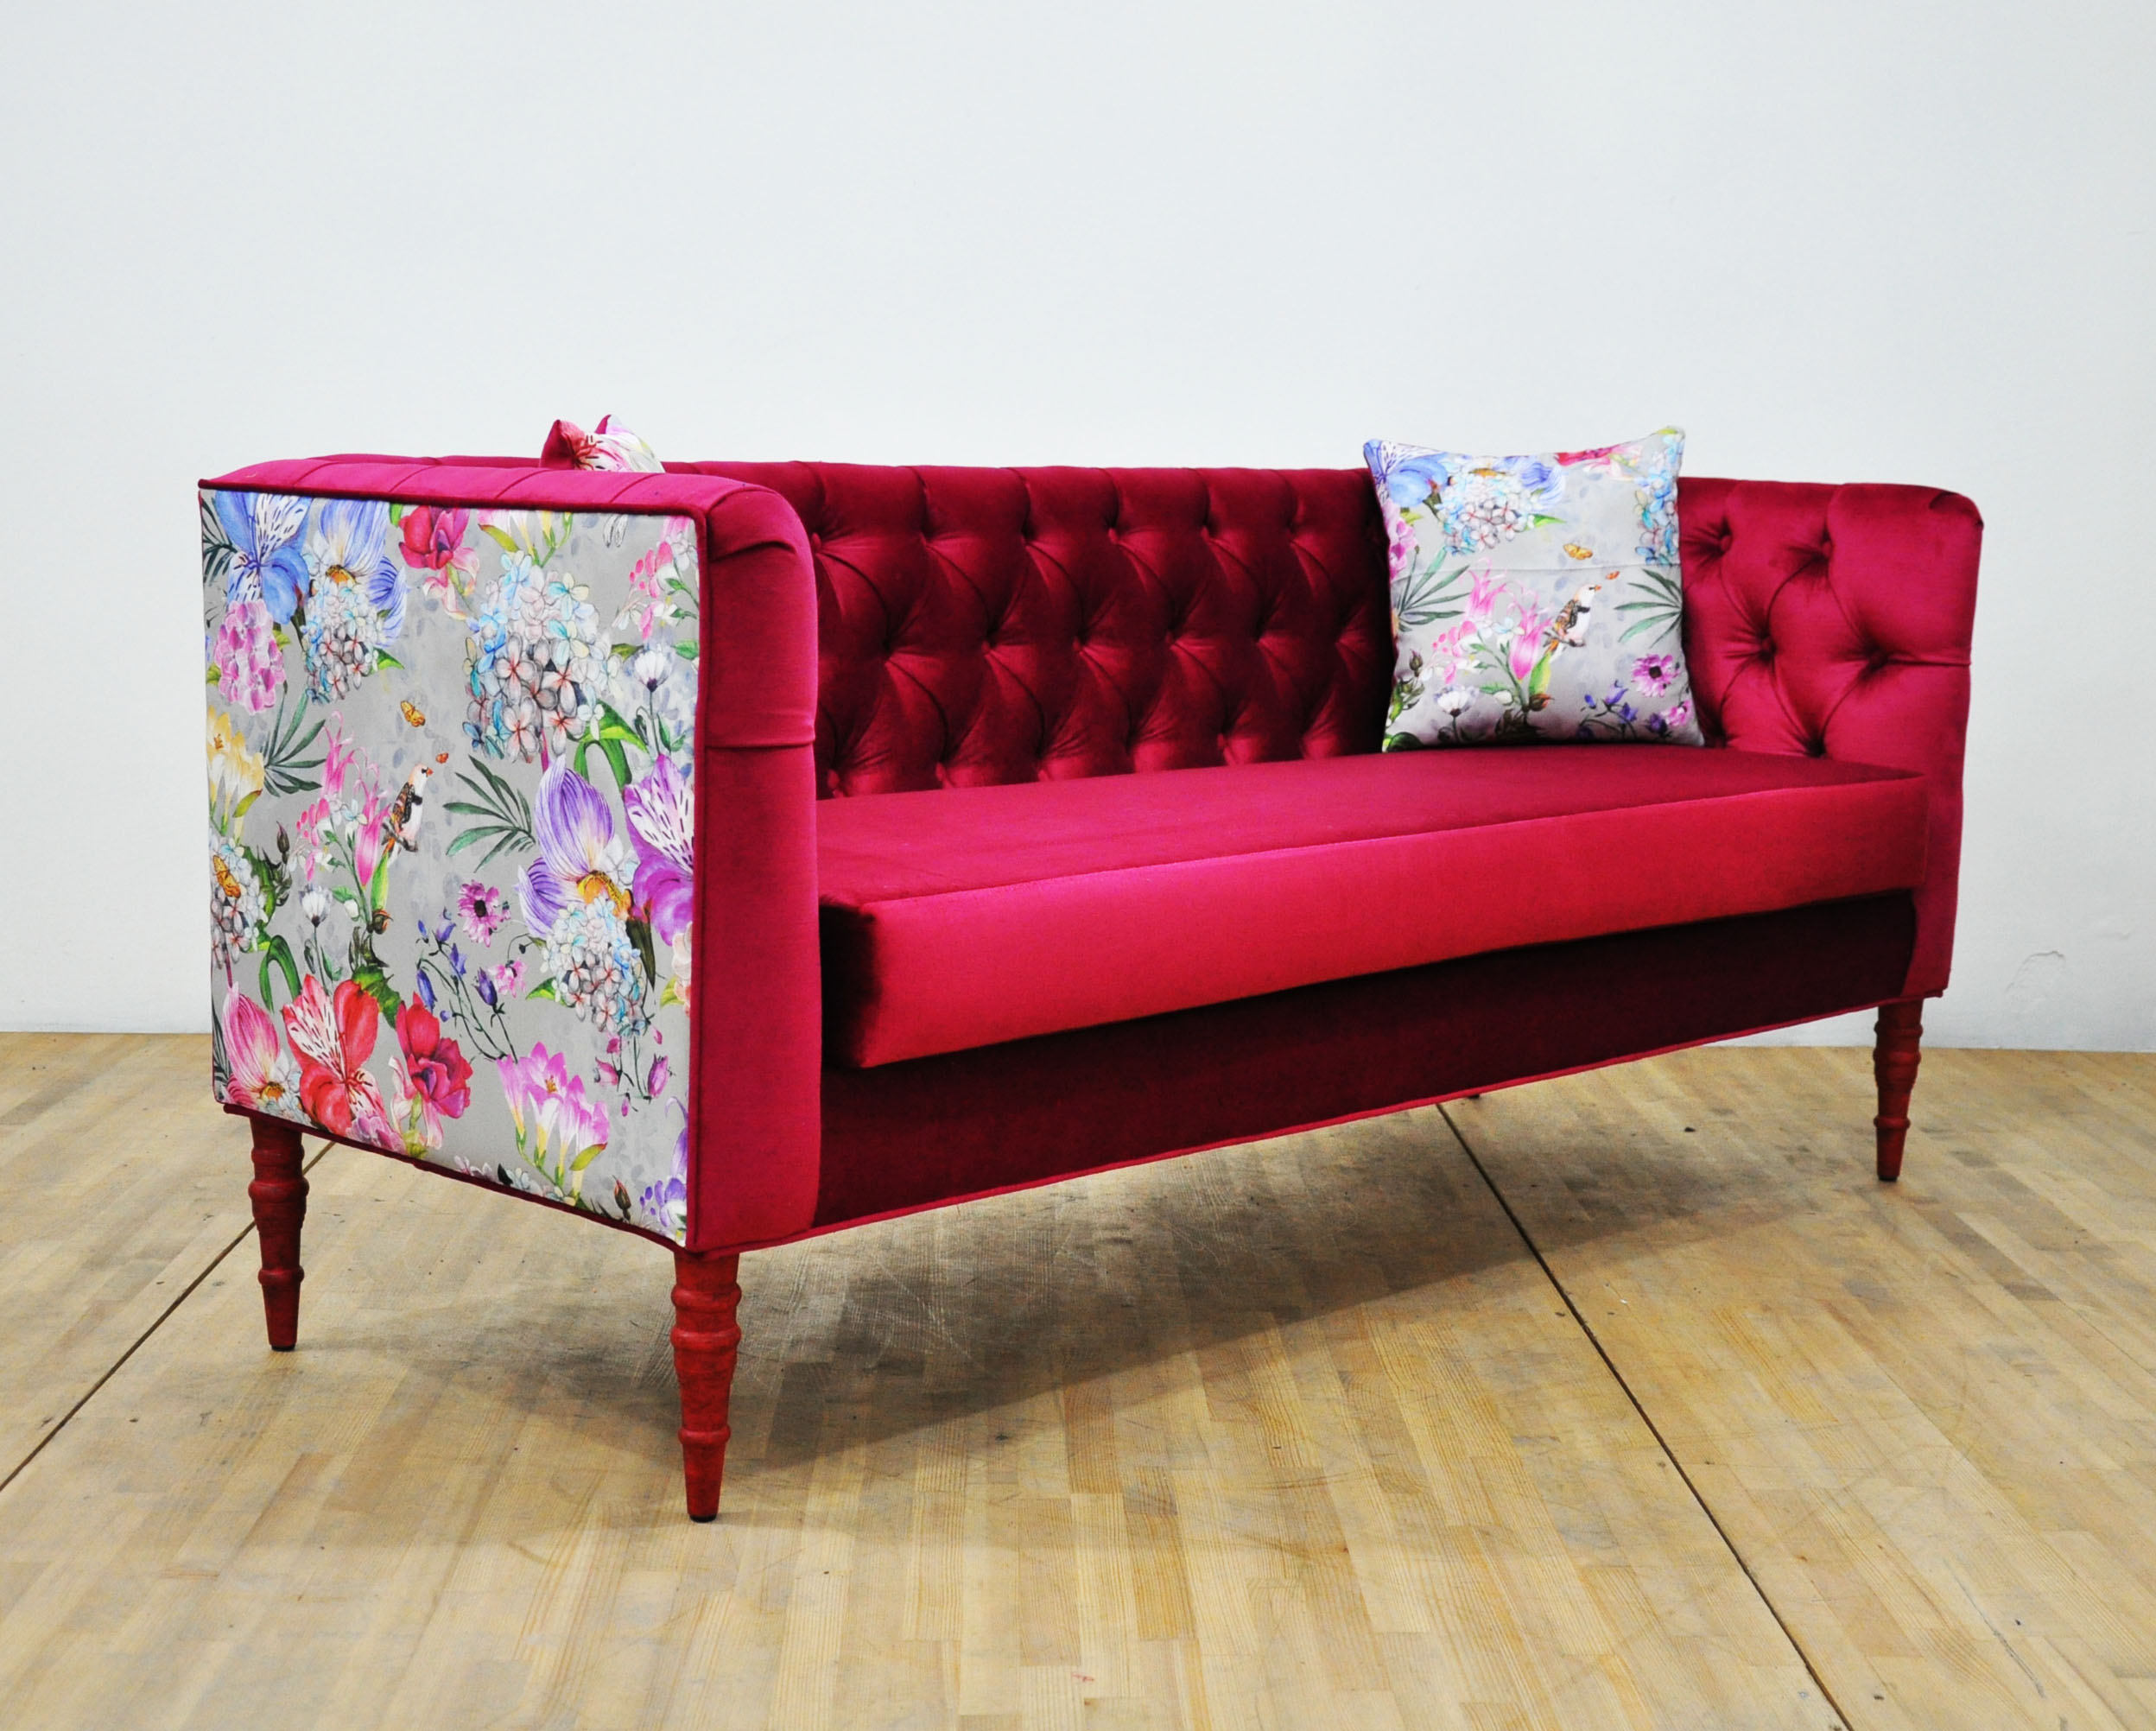 Burgundy Fabric Sofa & Loveseat Set w/Graphic Throw Pillows